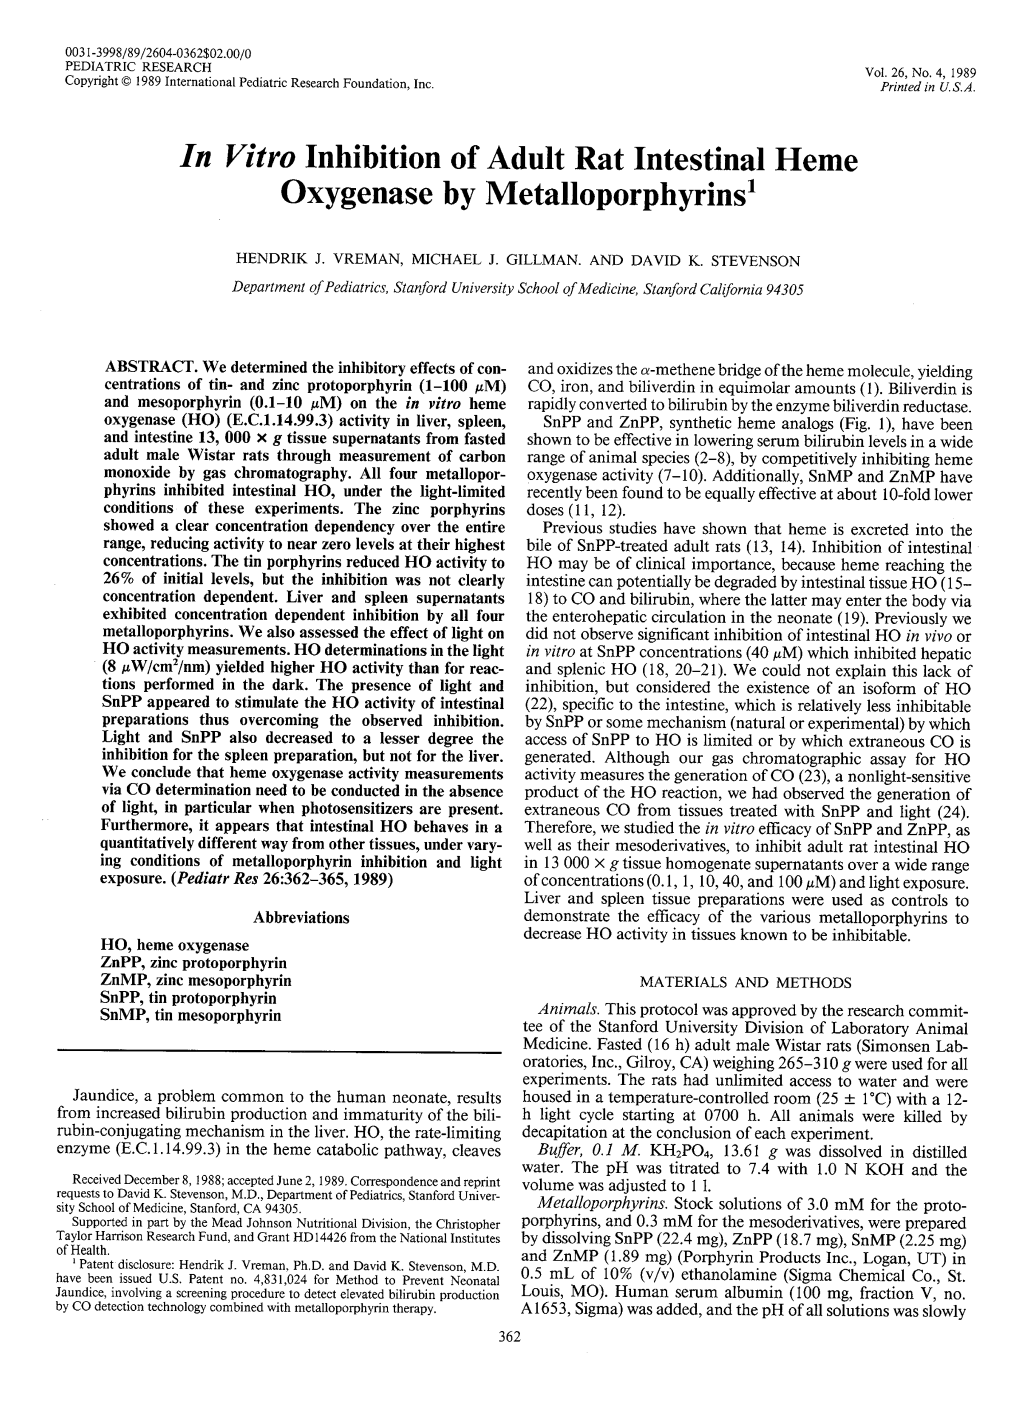 In Vitro Inhibition of Adult Rat Intestinal Heme Oxygenase by Metalloporphyrinsl